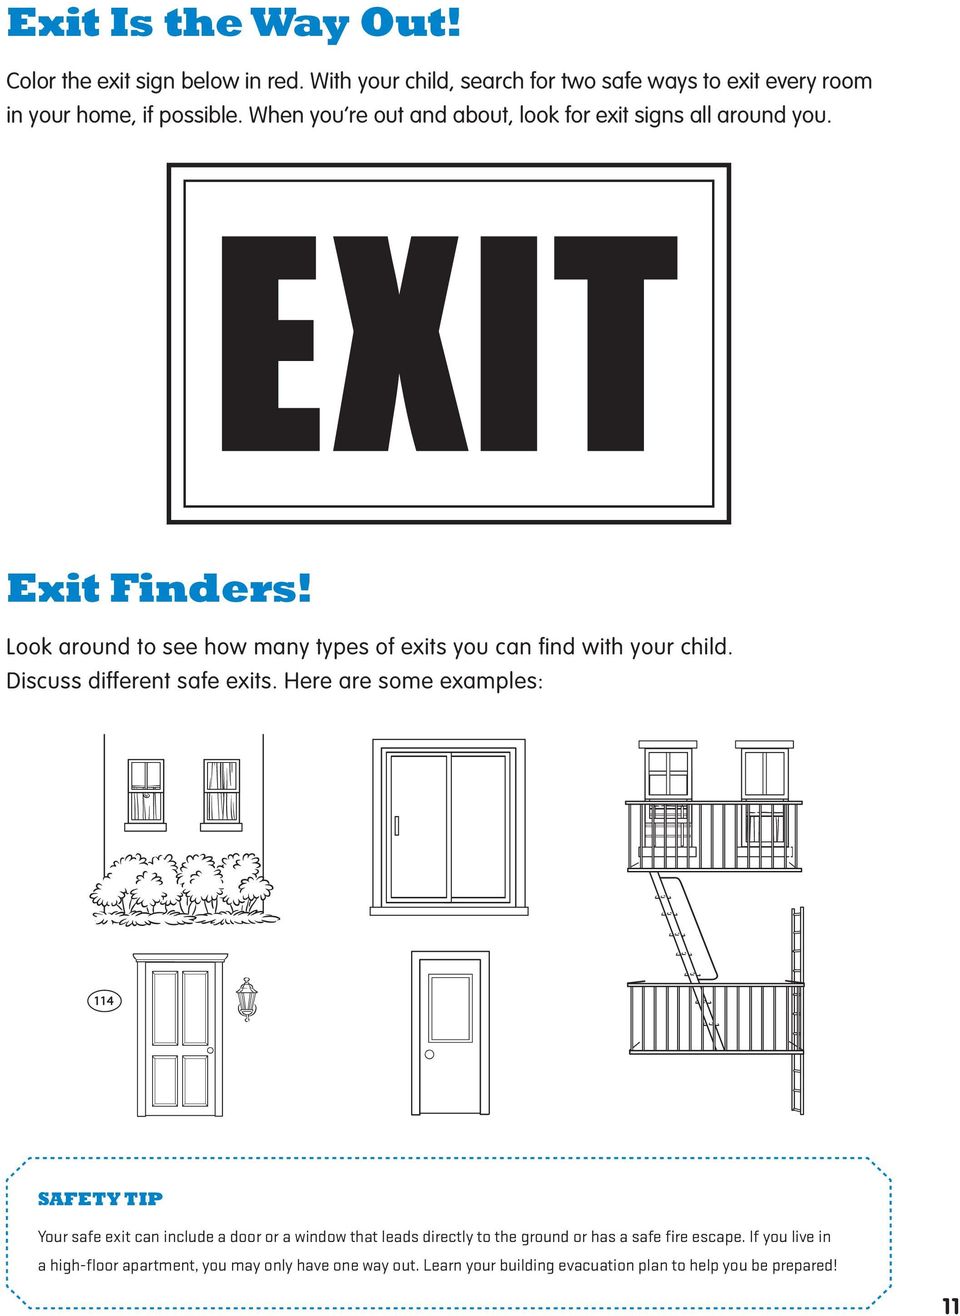 Discuss different safe exits.